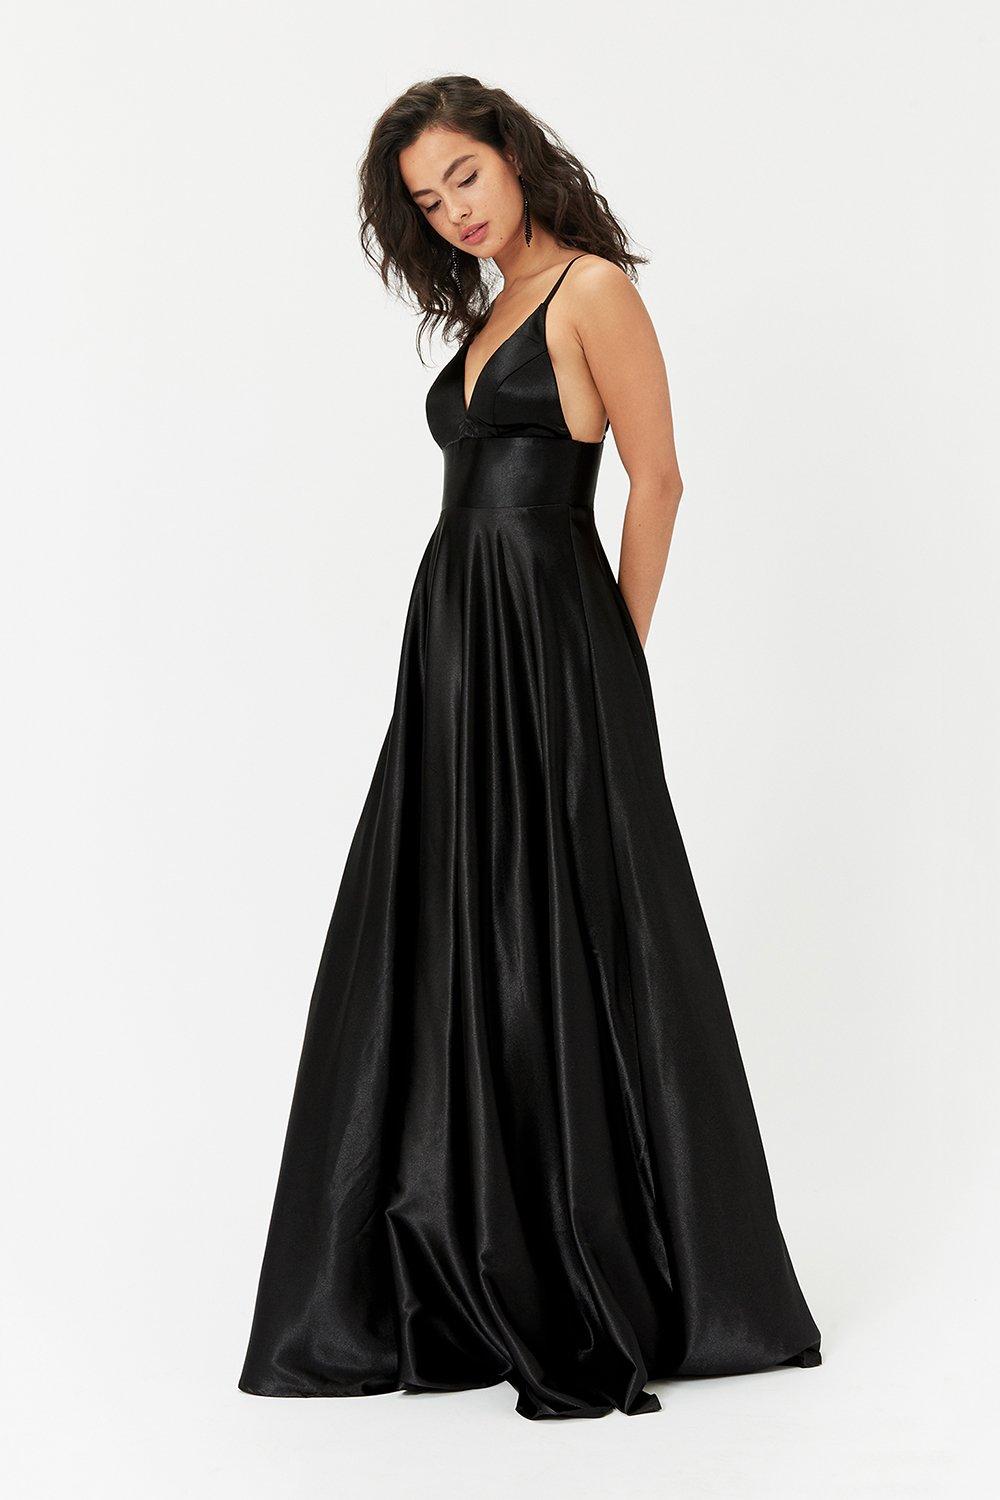 black strappy satin dress